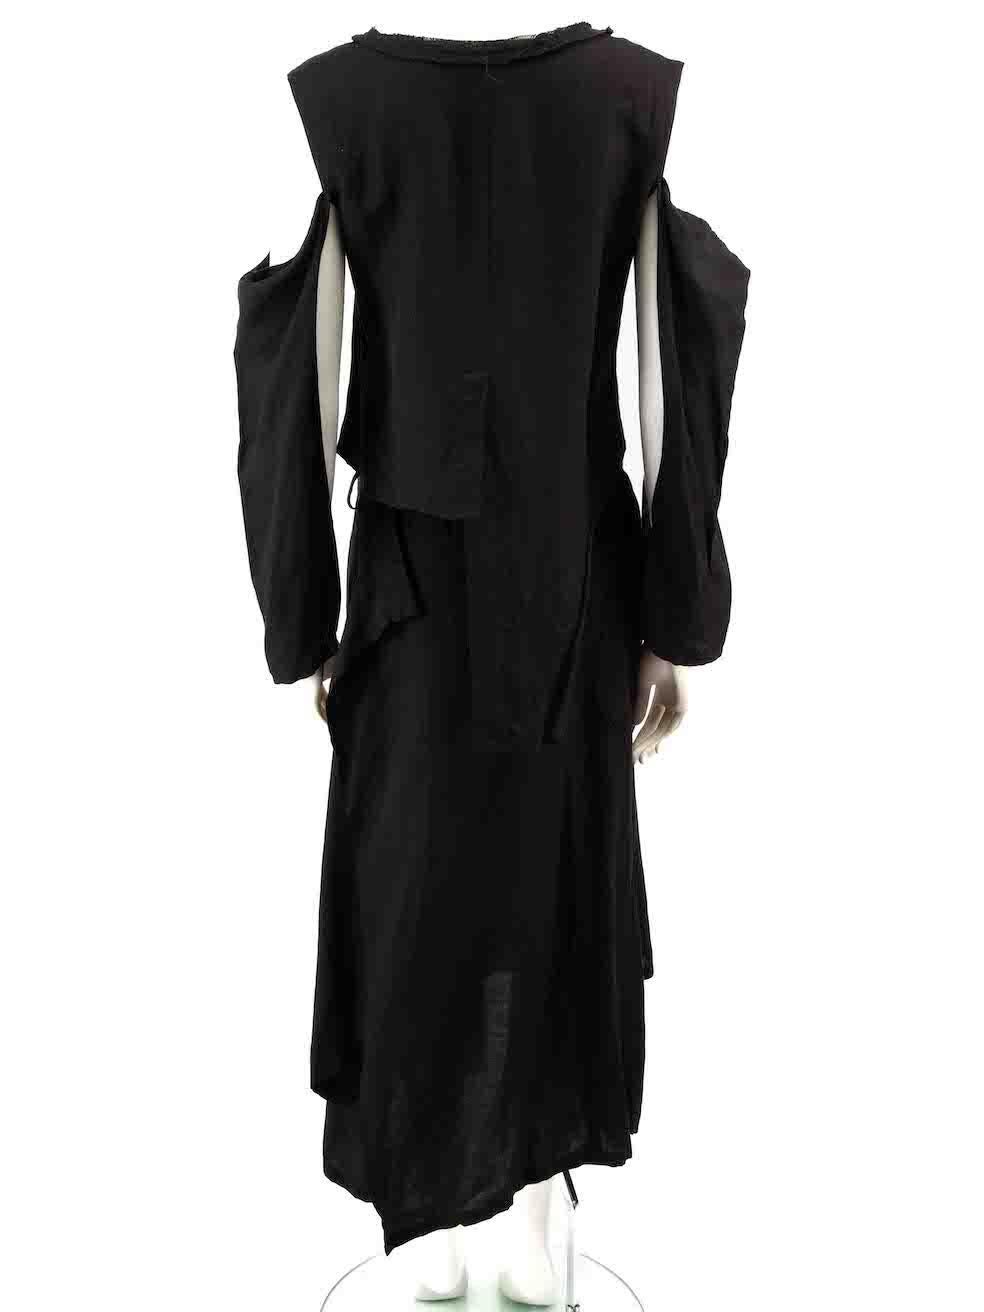 Yohji Yamamoto Black Asymmetric Top & Skirt Set Size S In Good Condition For Sale In London, GB